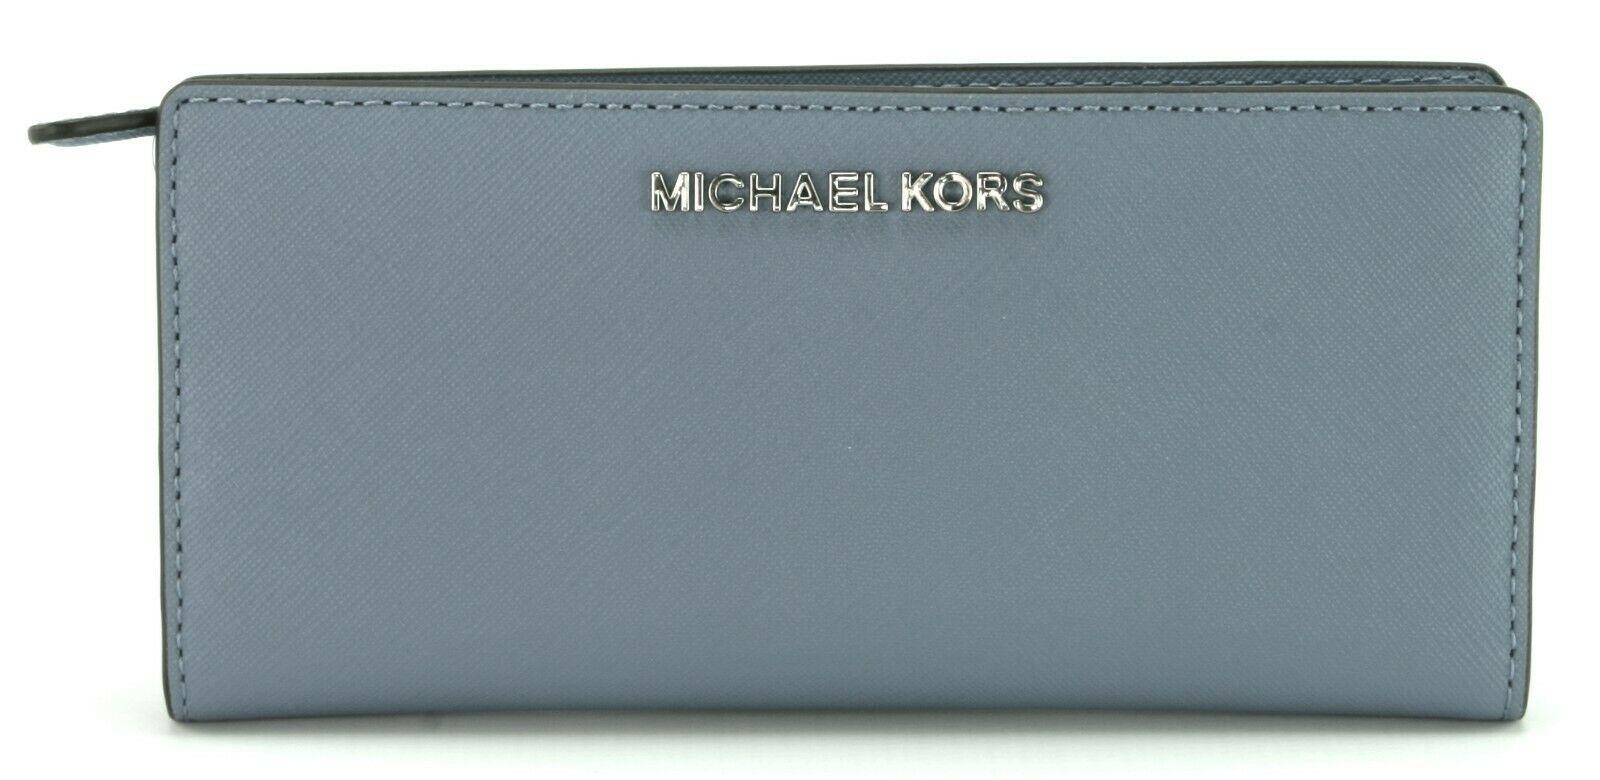 Michael Kors Jet Set Travel Medium Top Zip Card Case Wallet Coin Pouch Rose  Pink, ose, Wallet : Amazon.co.uk: Fashion